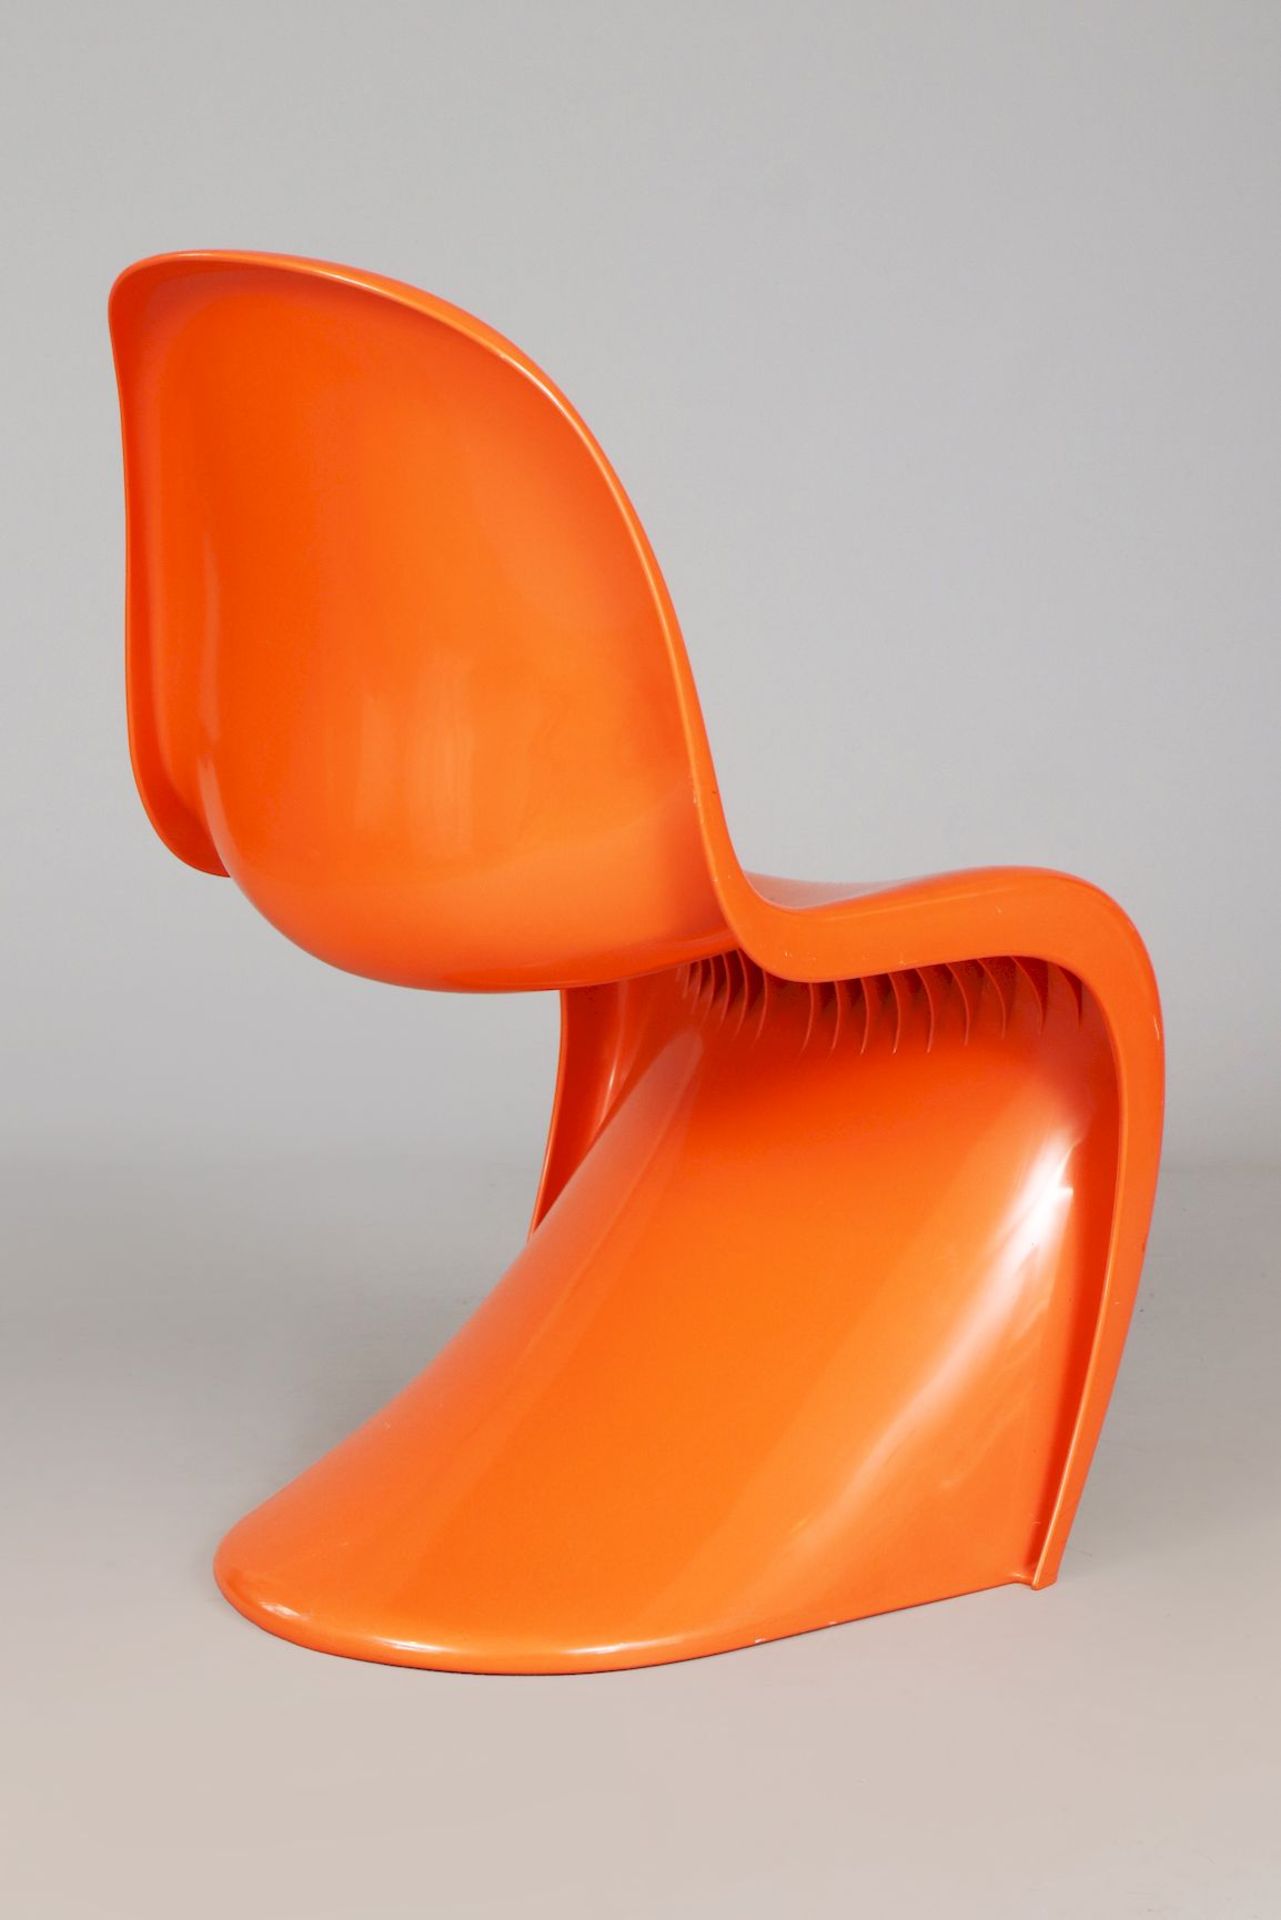 Verner PANTON (1926-1998) ¨Panton Chair¨ - Bild 2 aus 5